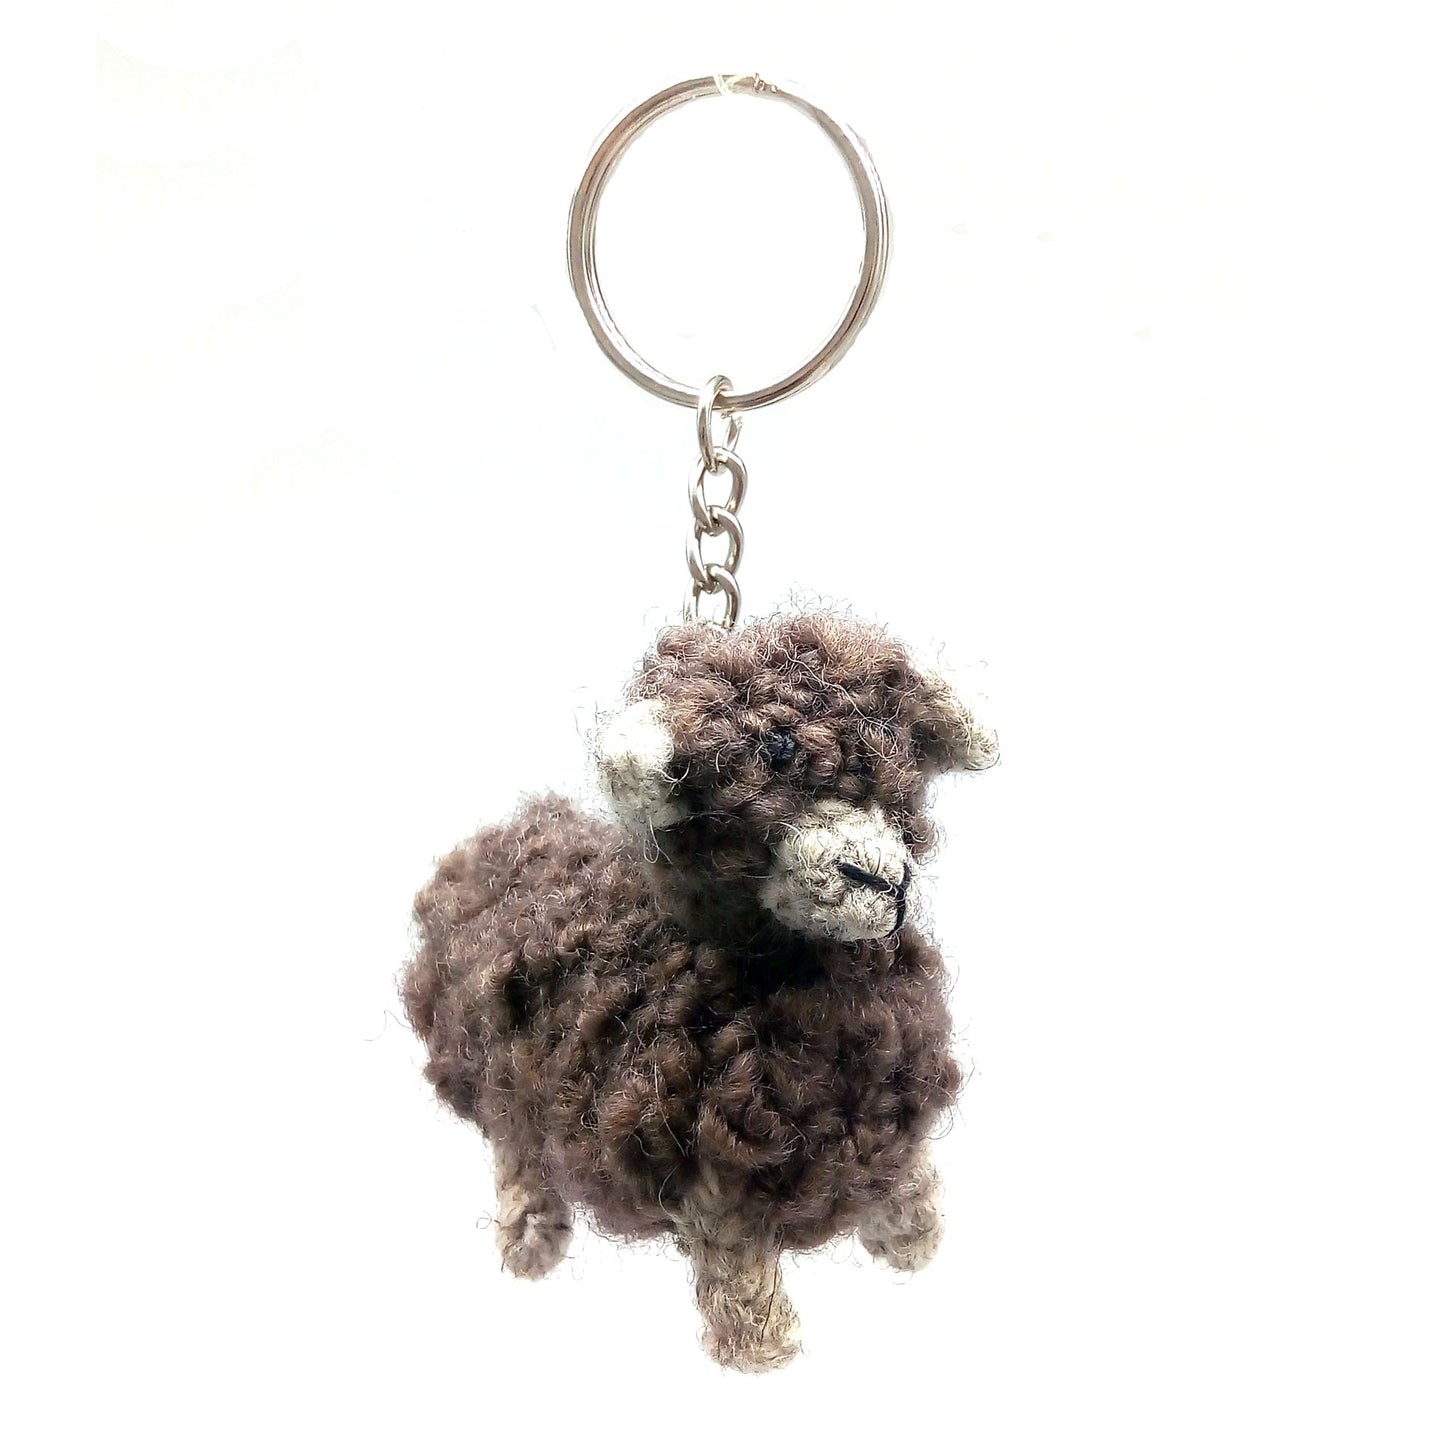 Sheep keychain